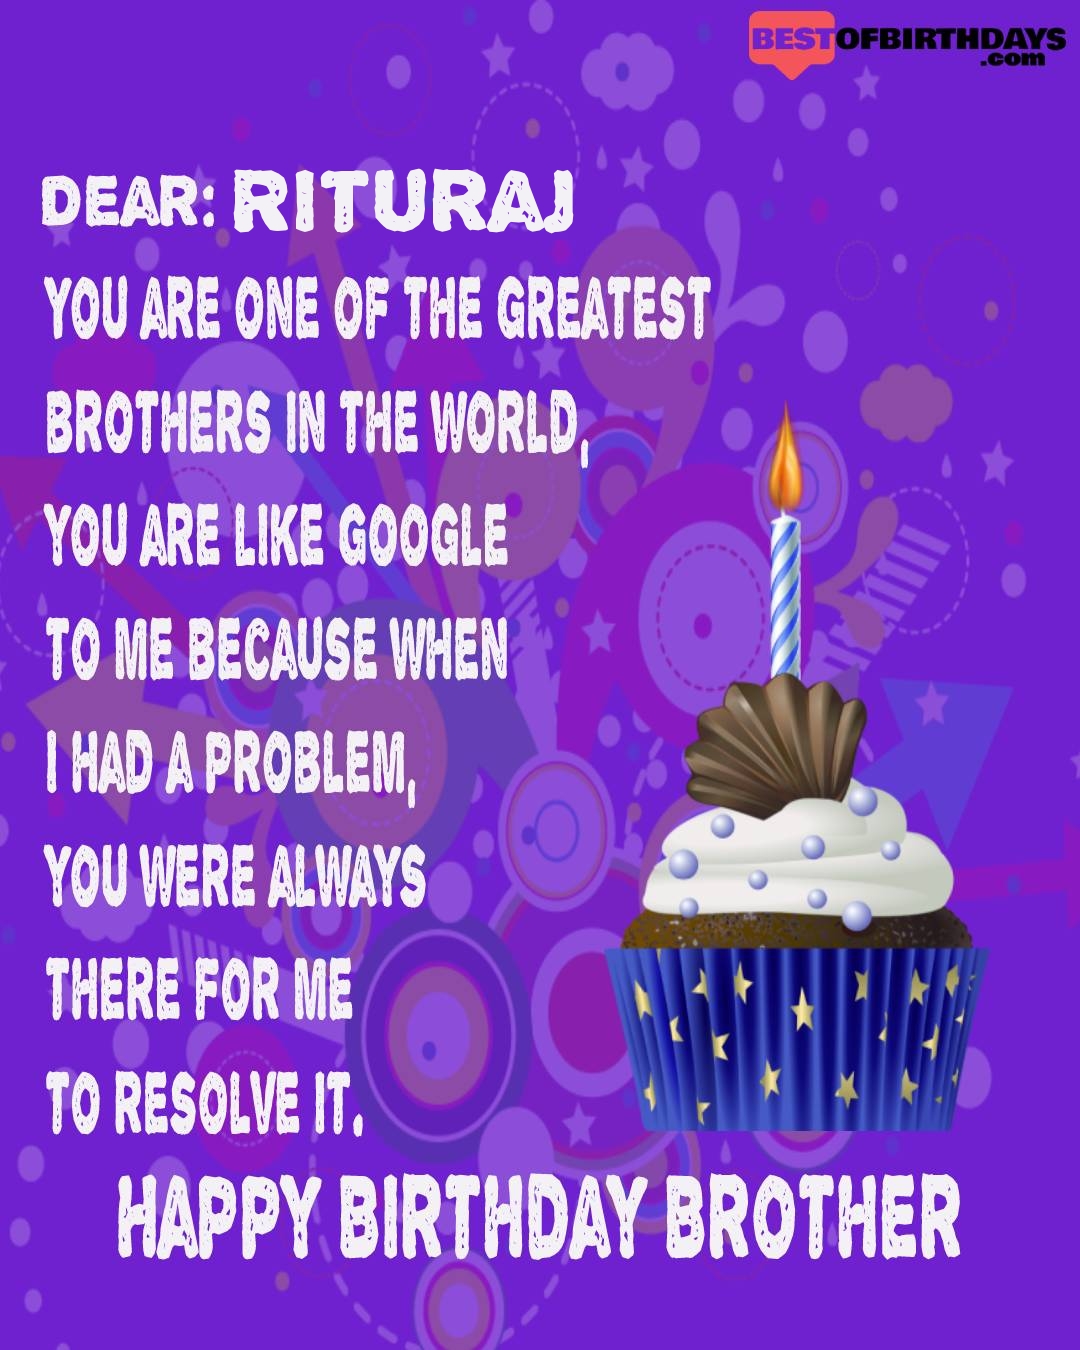 Happy birthday rituraj bhai brother bro